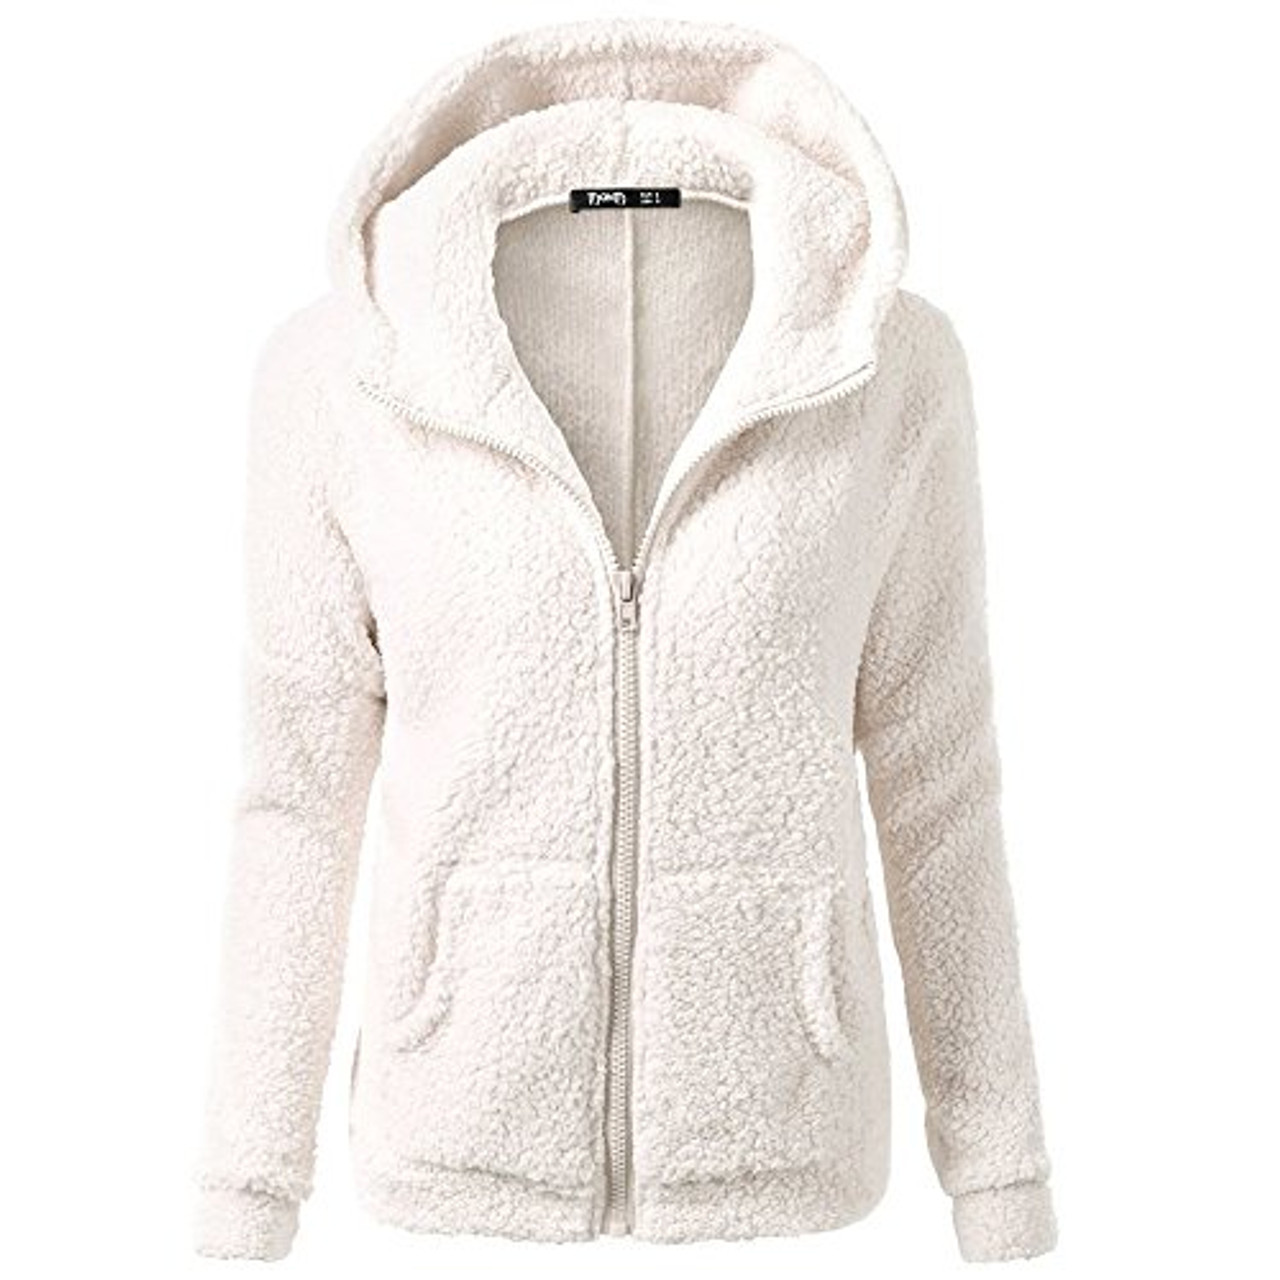 Dylanlla Womens Oversized Sherpa Pullover Hoodies Winter Warm Fuzzy Fleece Hooded Sweatshirts Sweaters with Pocket 